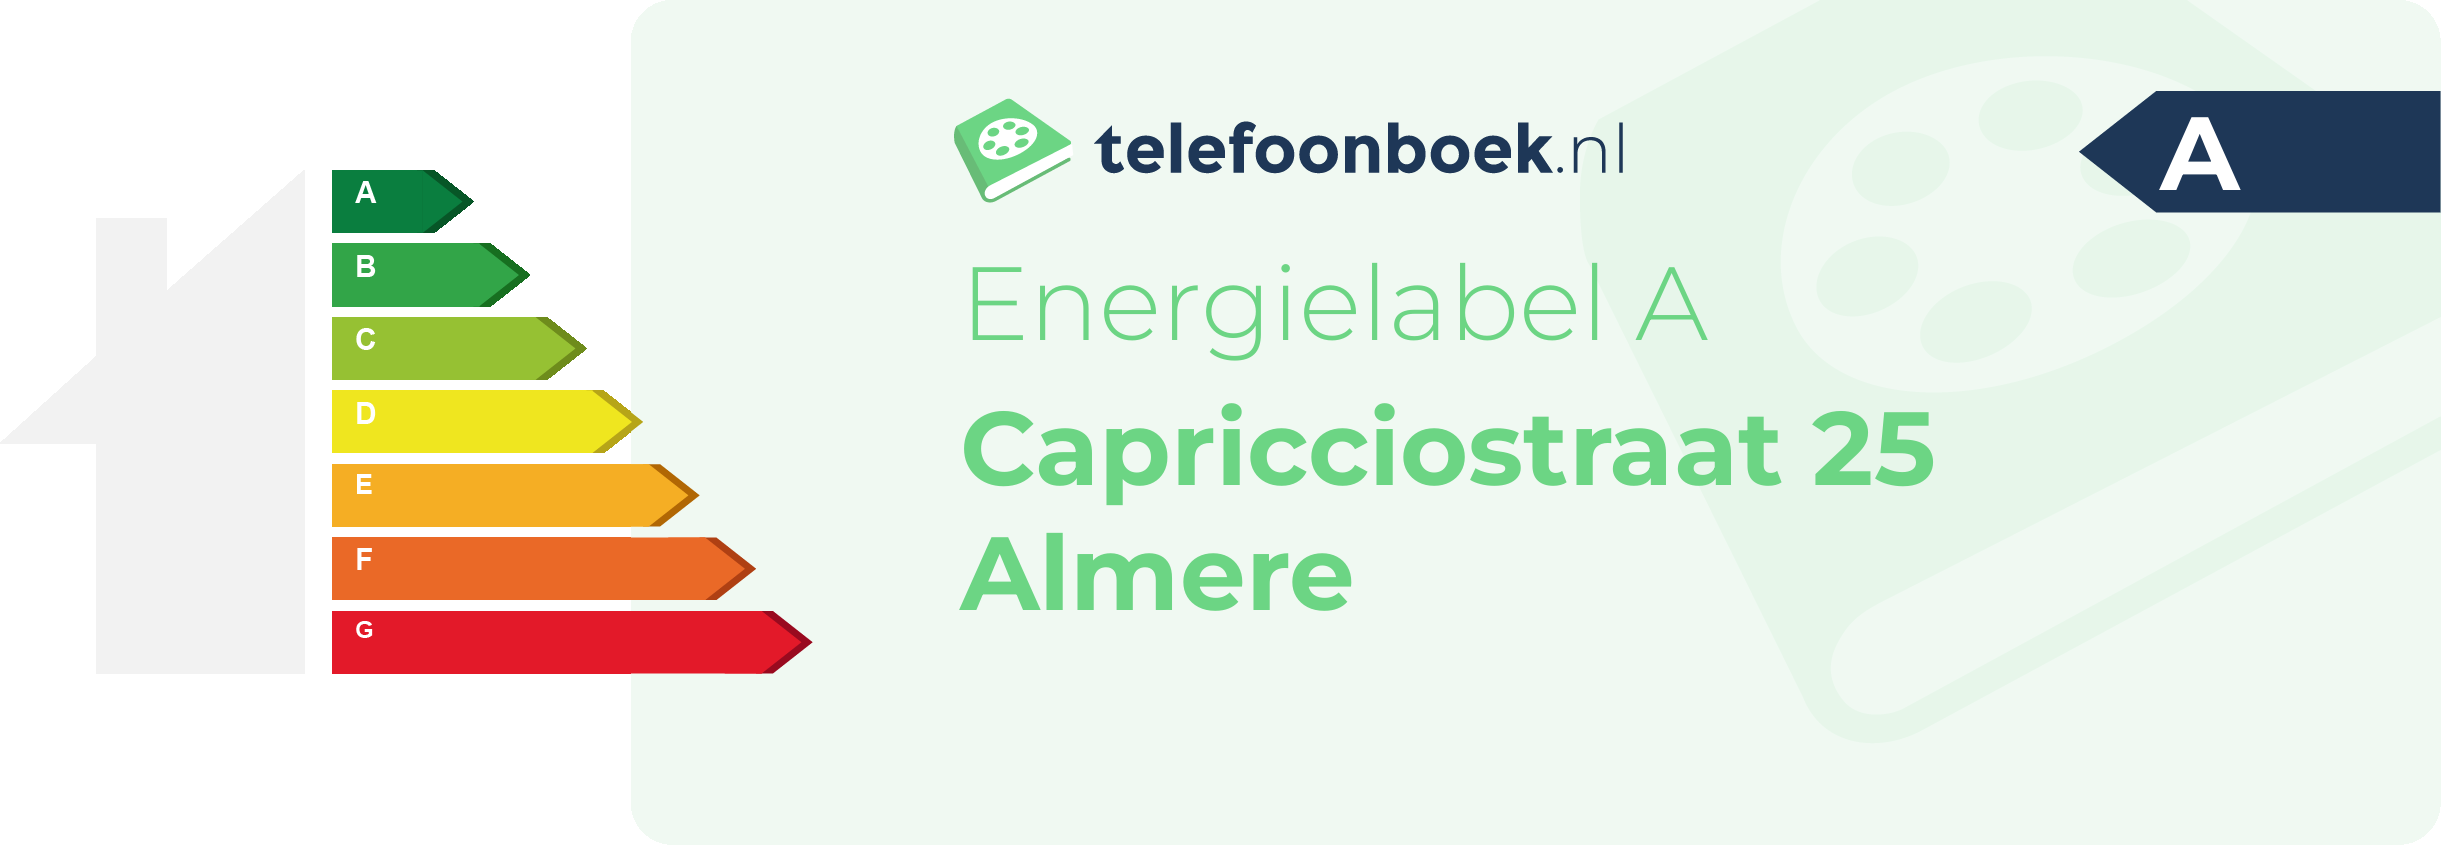 Energielabel Capricciostraat 25 Almere